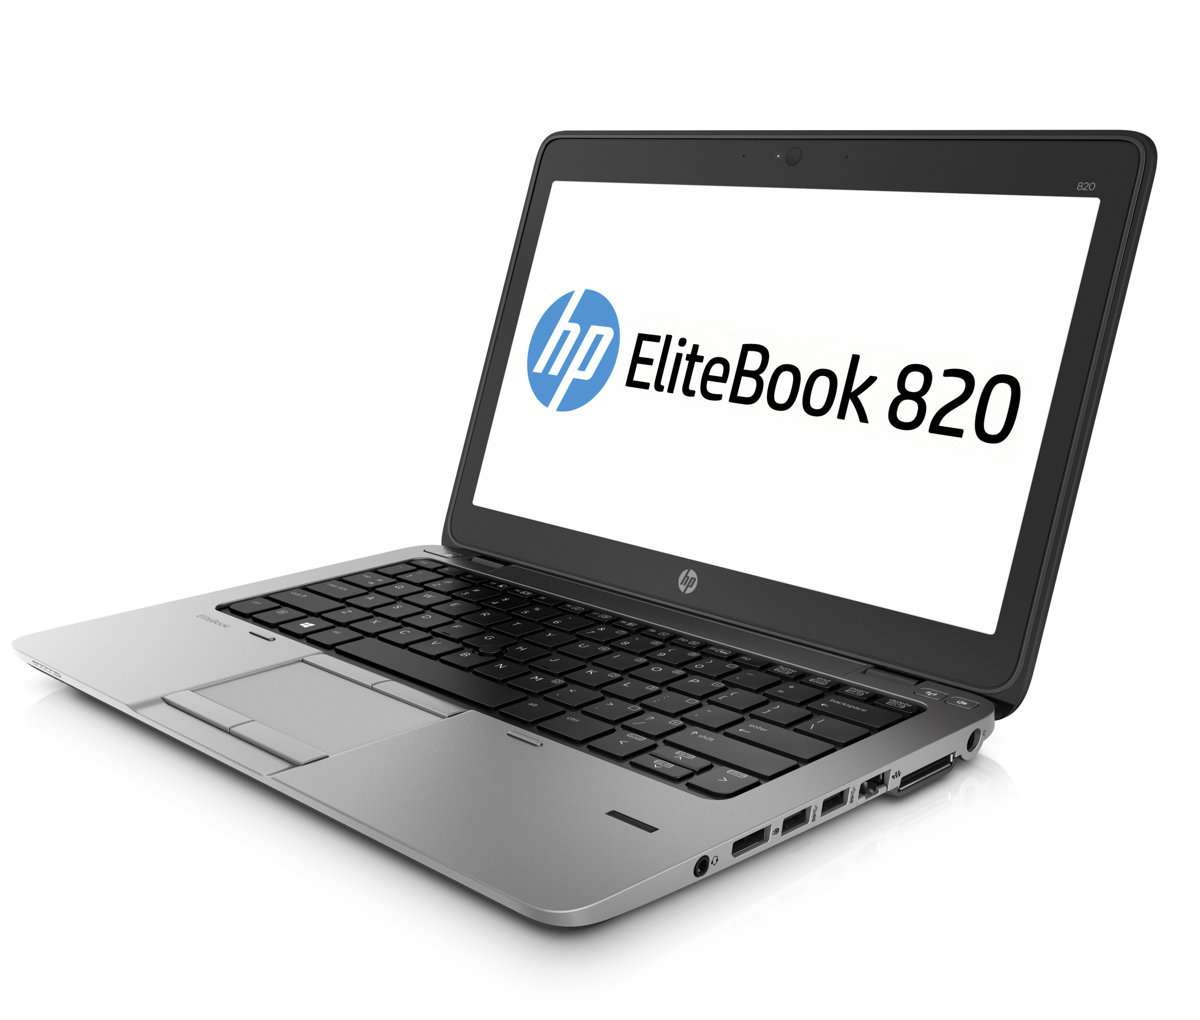 HP Elitebook 820 G1 (Core i5 4300U, 4GB, 500GB, Intel HD Graphics 4400, 12.5 inch)